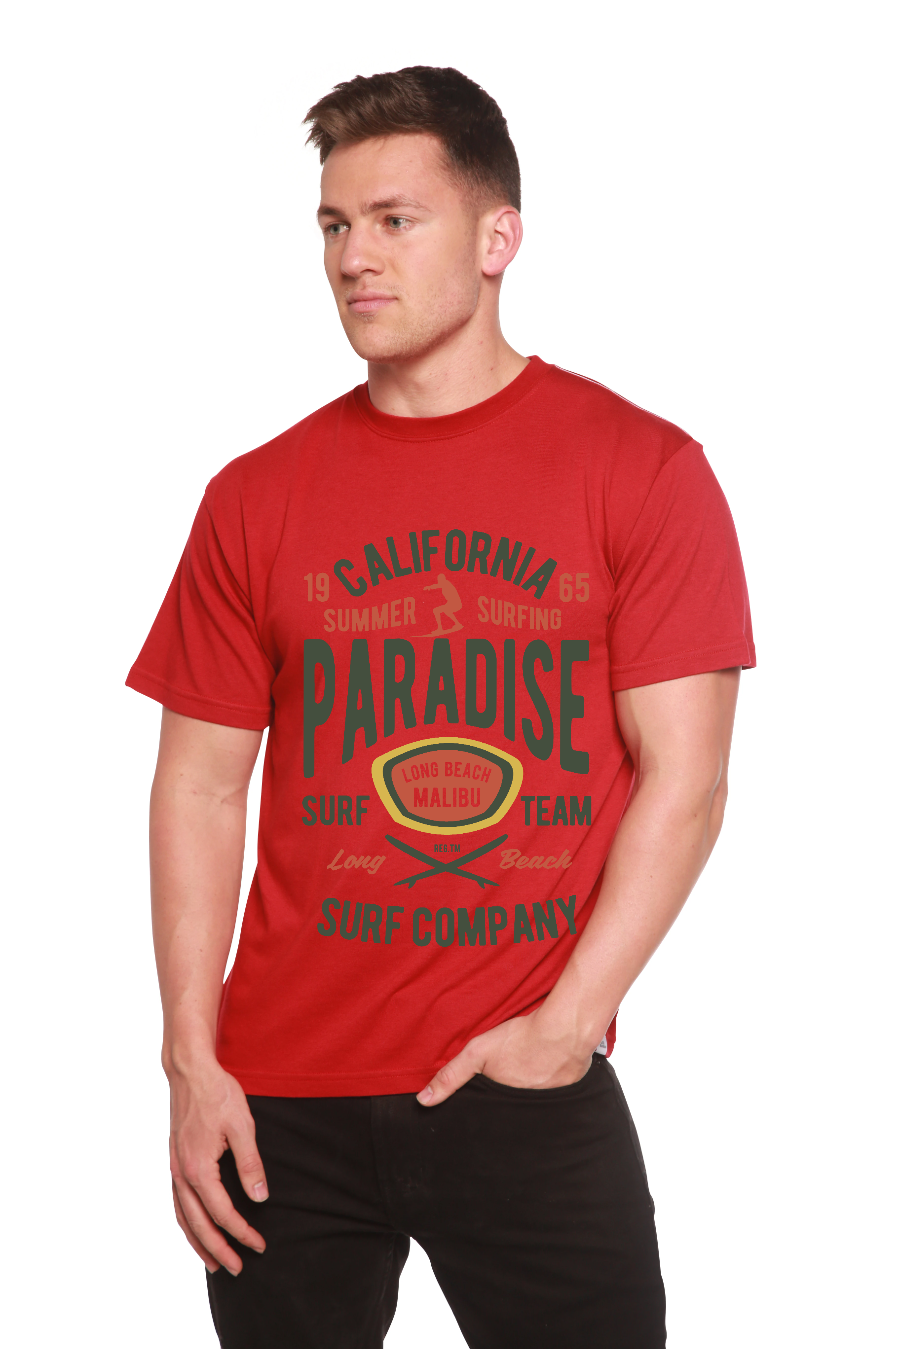 California Summer Surfing Men's Bamboo Viscose/Organic Cotton Short Sleeve T-Shirt - Spun Bamboo